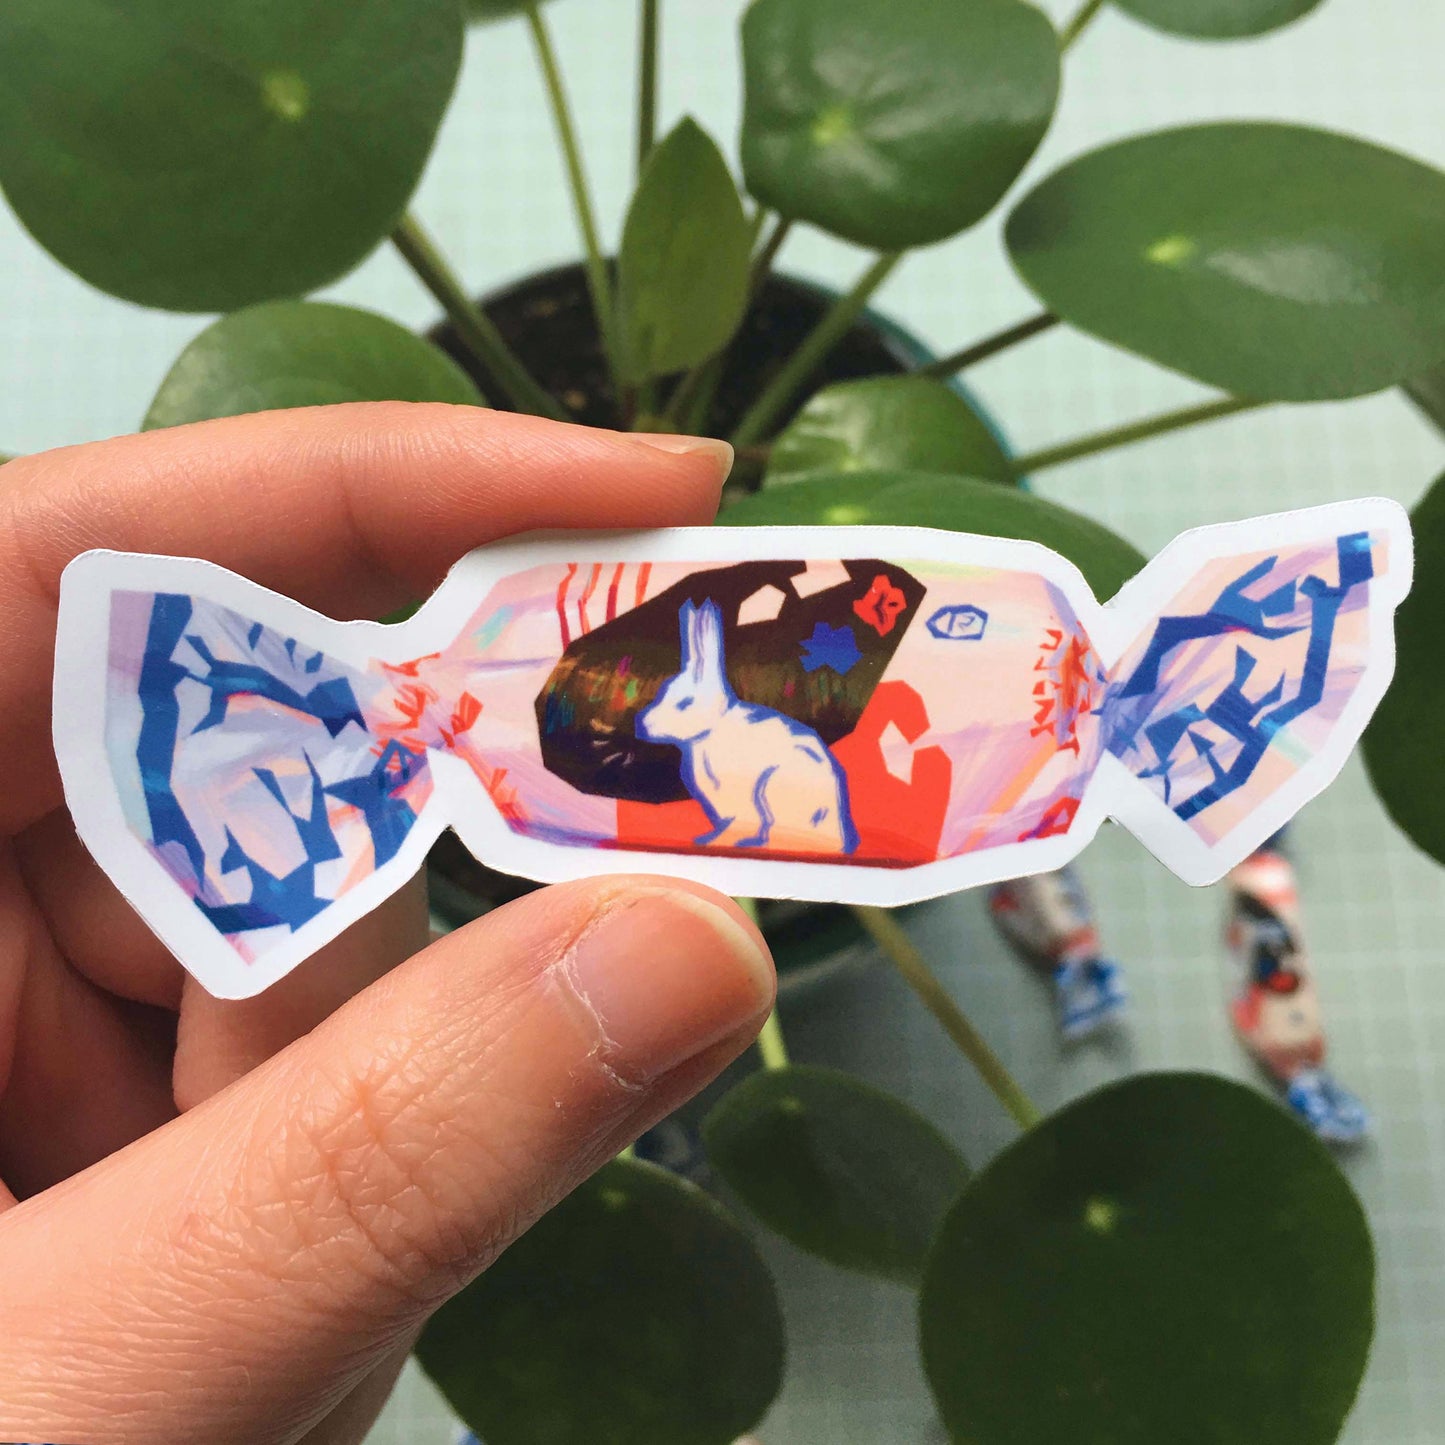 White Rabbit Candy Waterproof Vinyl Sticker | Dabaitu Candy | Die Cut Sticker | Laptop Decal | asian food stickers